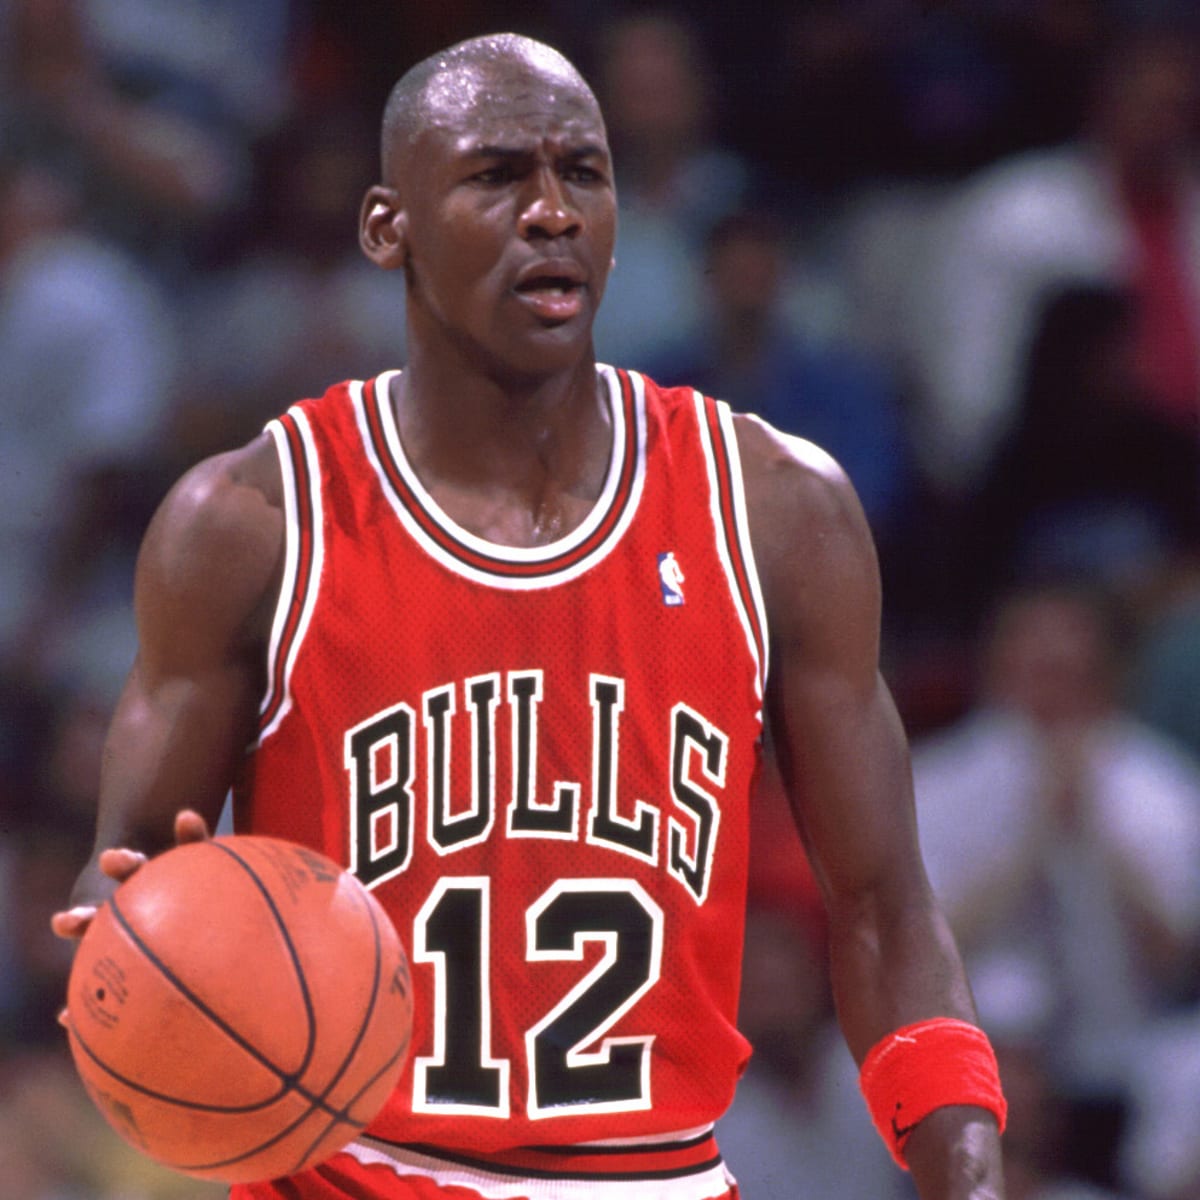 Official Michael Jordan Chicago Bulls Jerseys, Bulls City Jersey